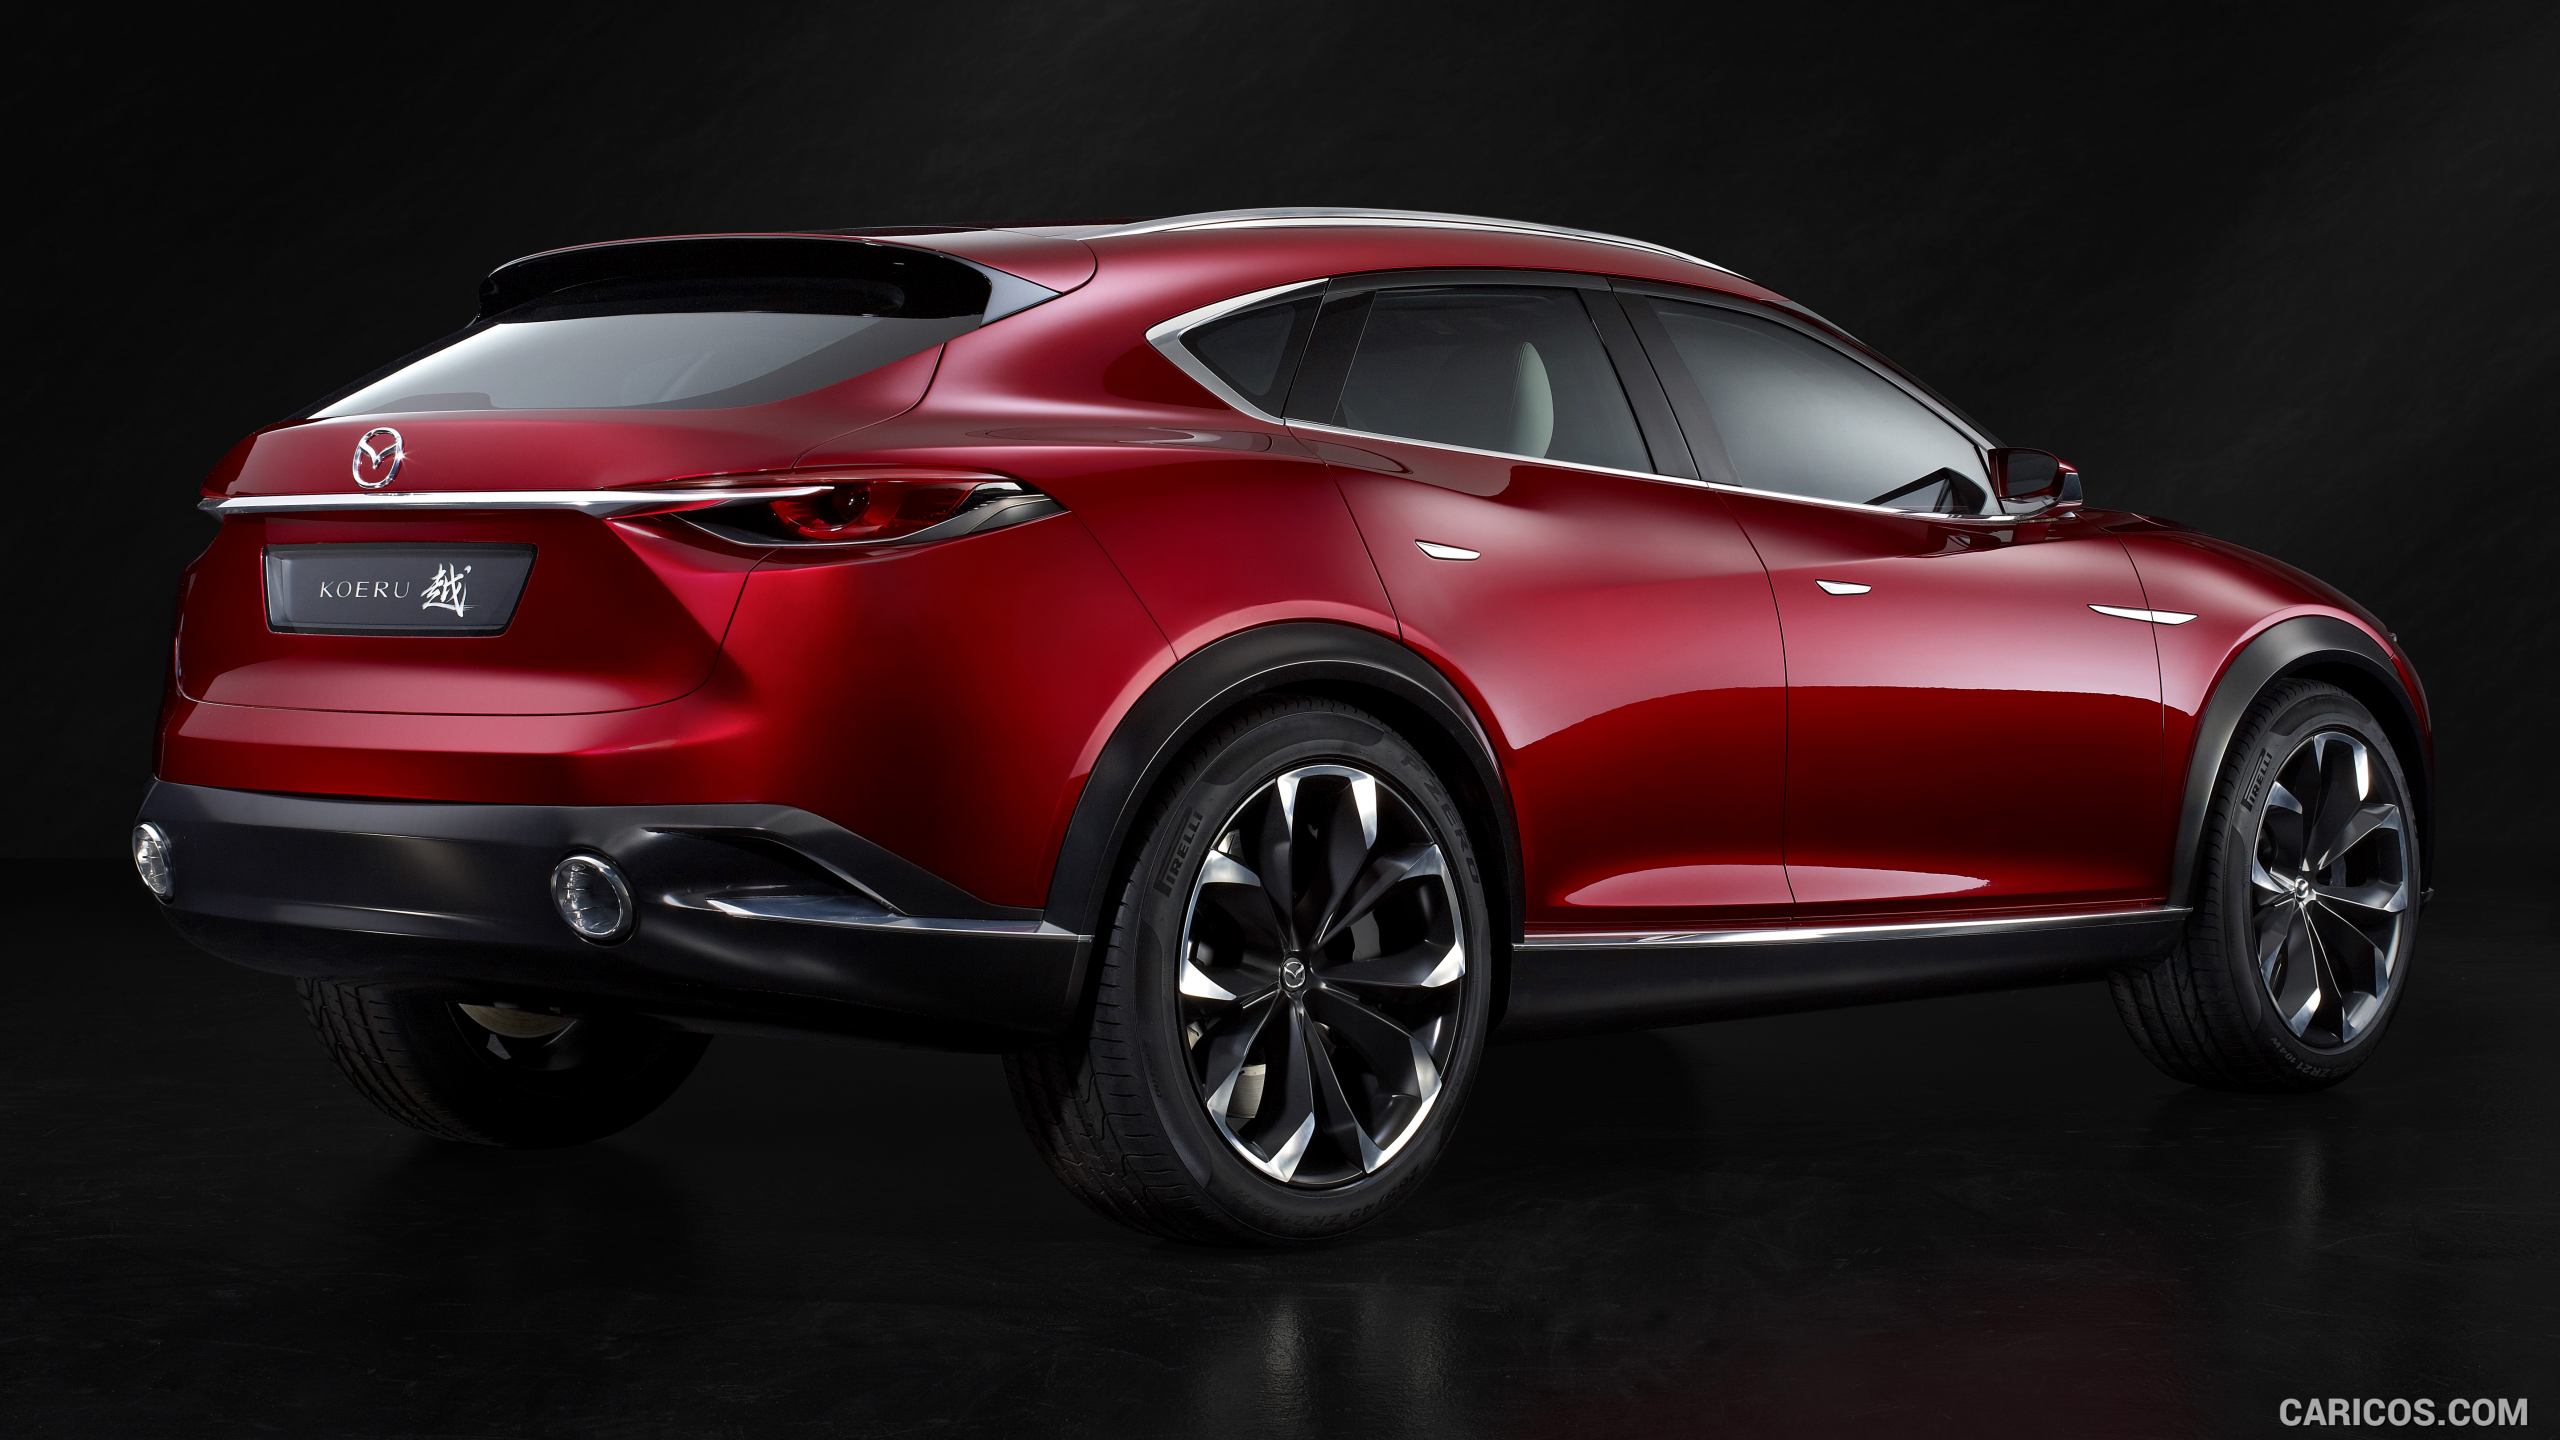 2015 Mazda Koeru Crossover Concept - Rear, #10 of 17